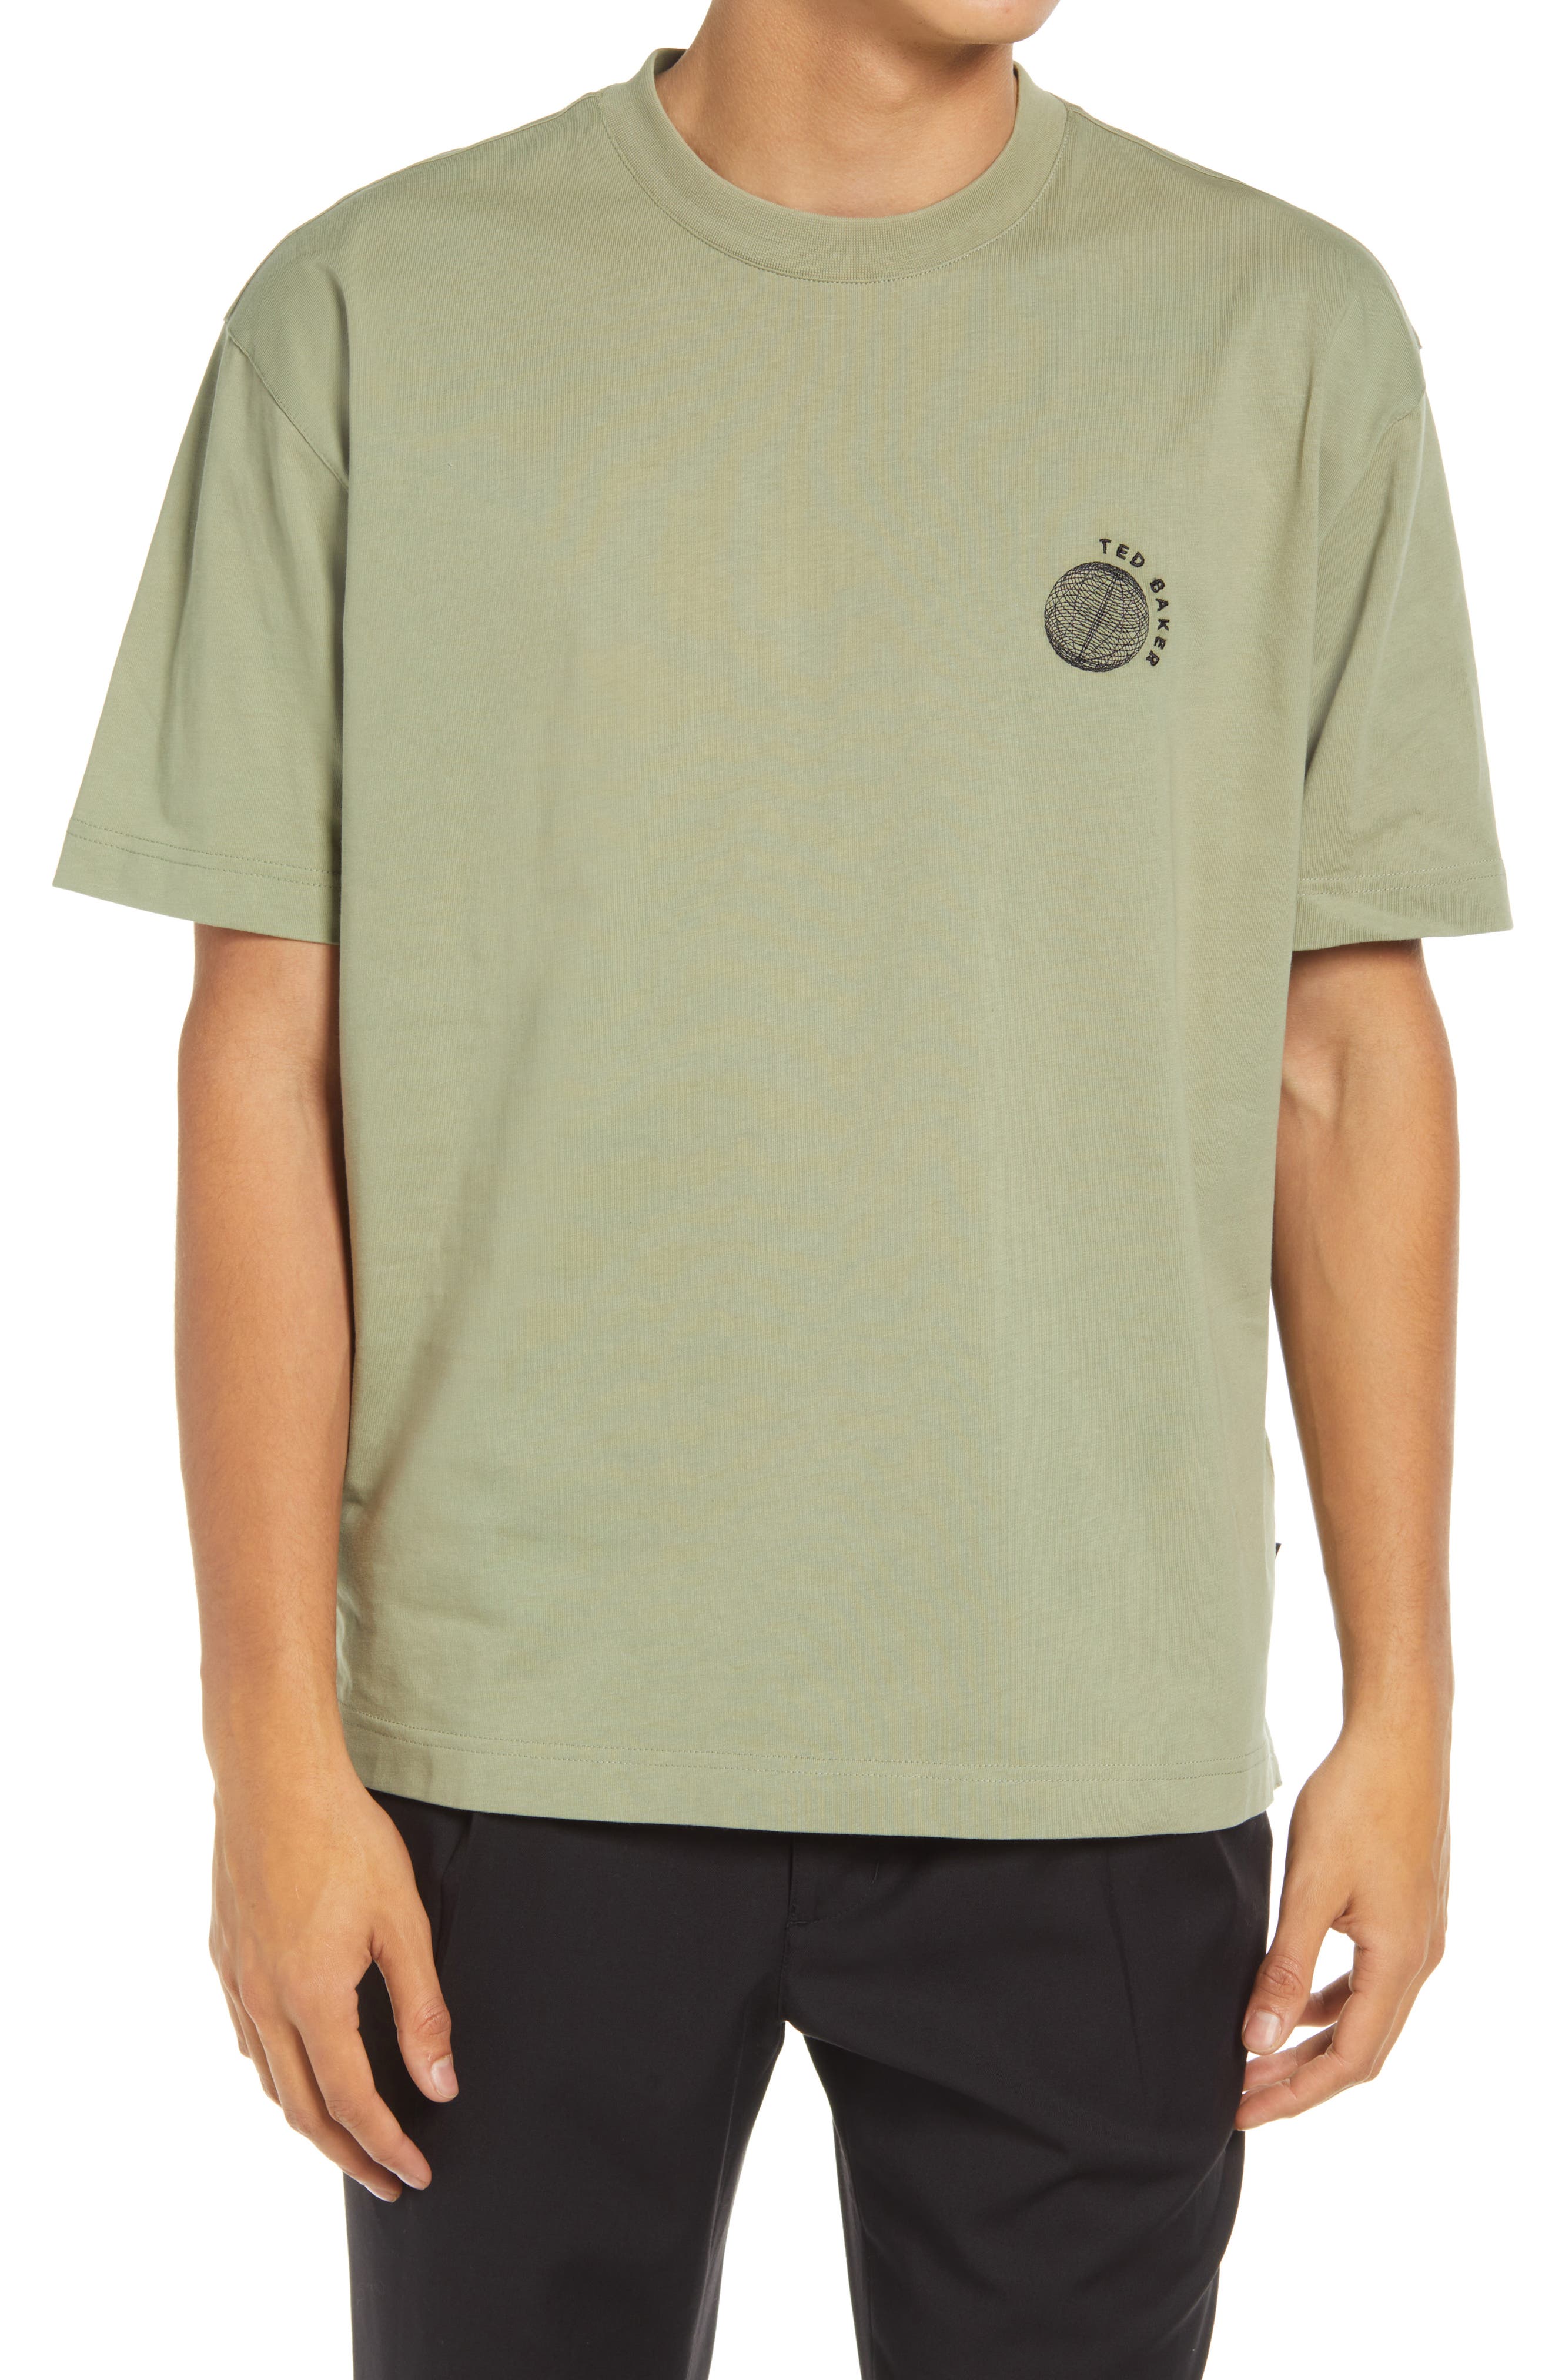 American Classics Unisex-Adult Bill and Ted Hang Ten Adult Short Sleeve T-Shirt T-Shirt